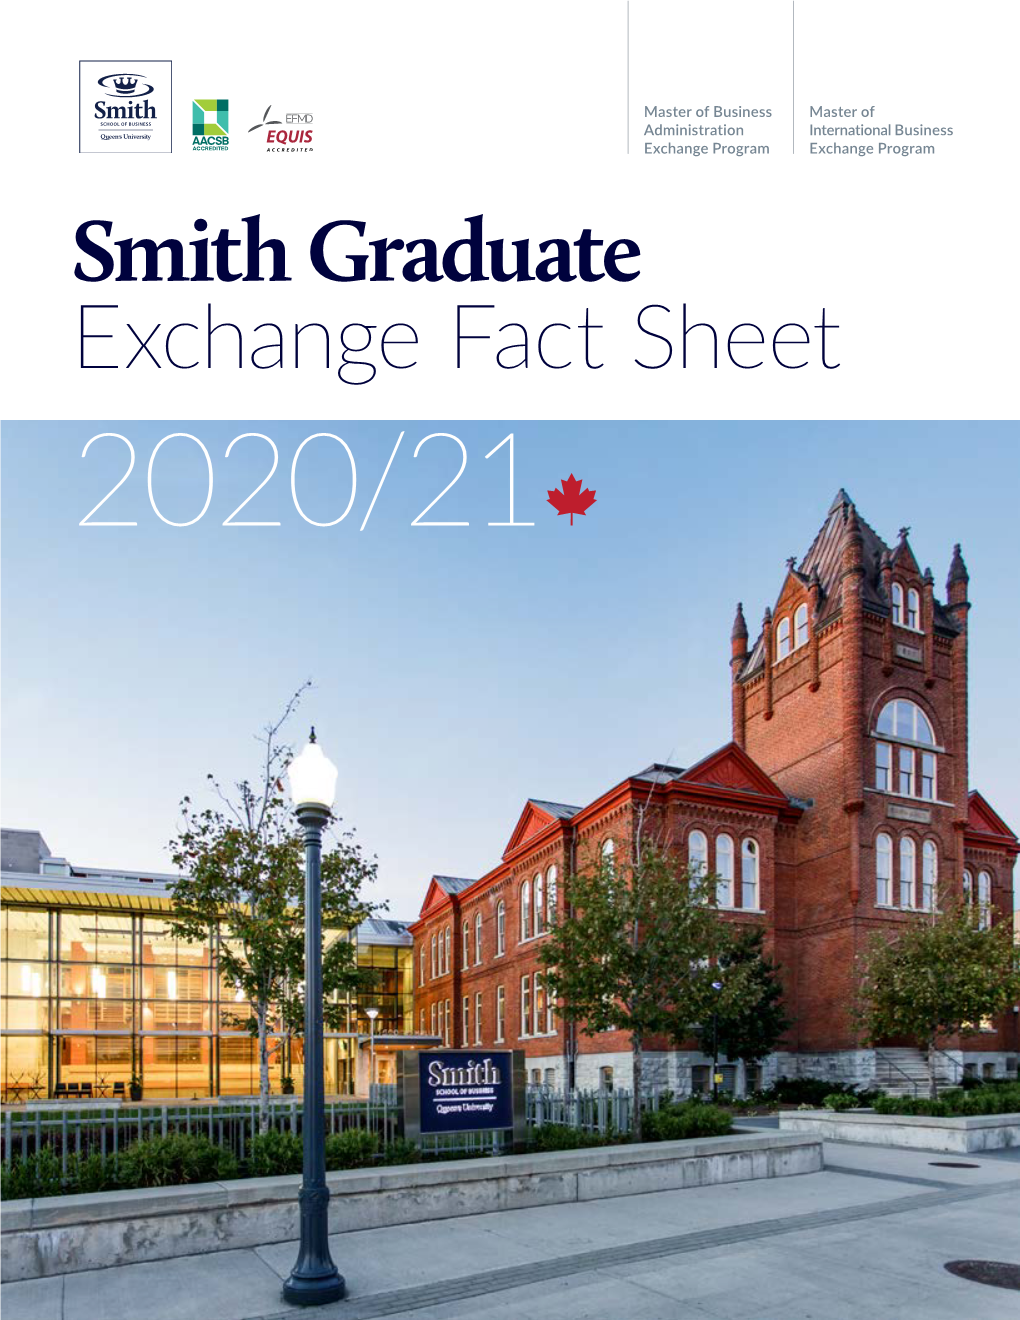 Smith Graduate Exchange Fact Sheet 2019/20